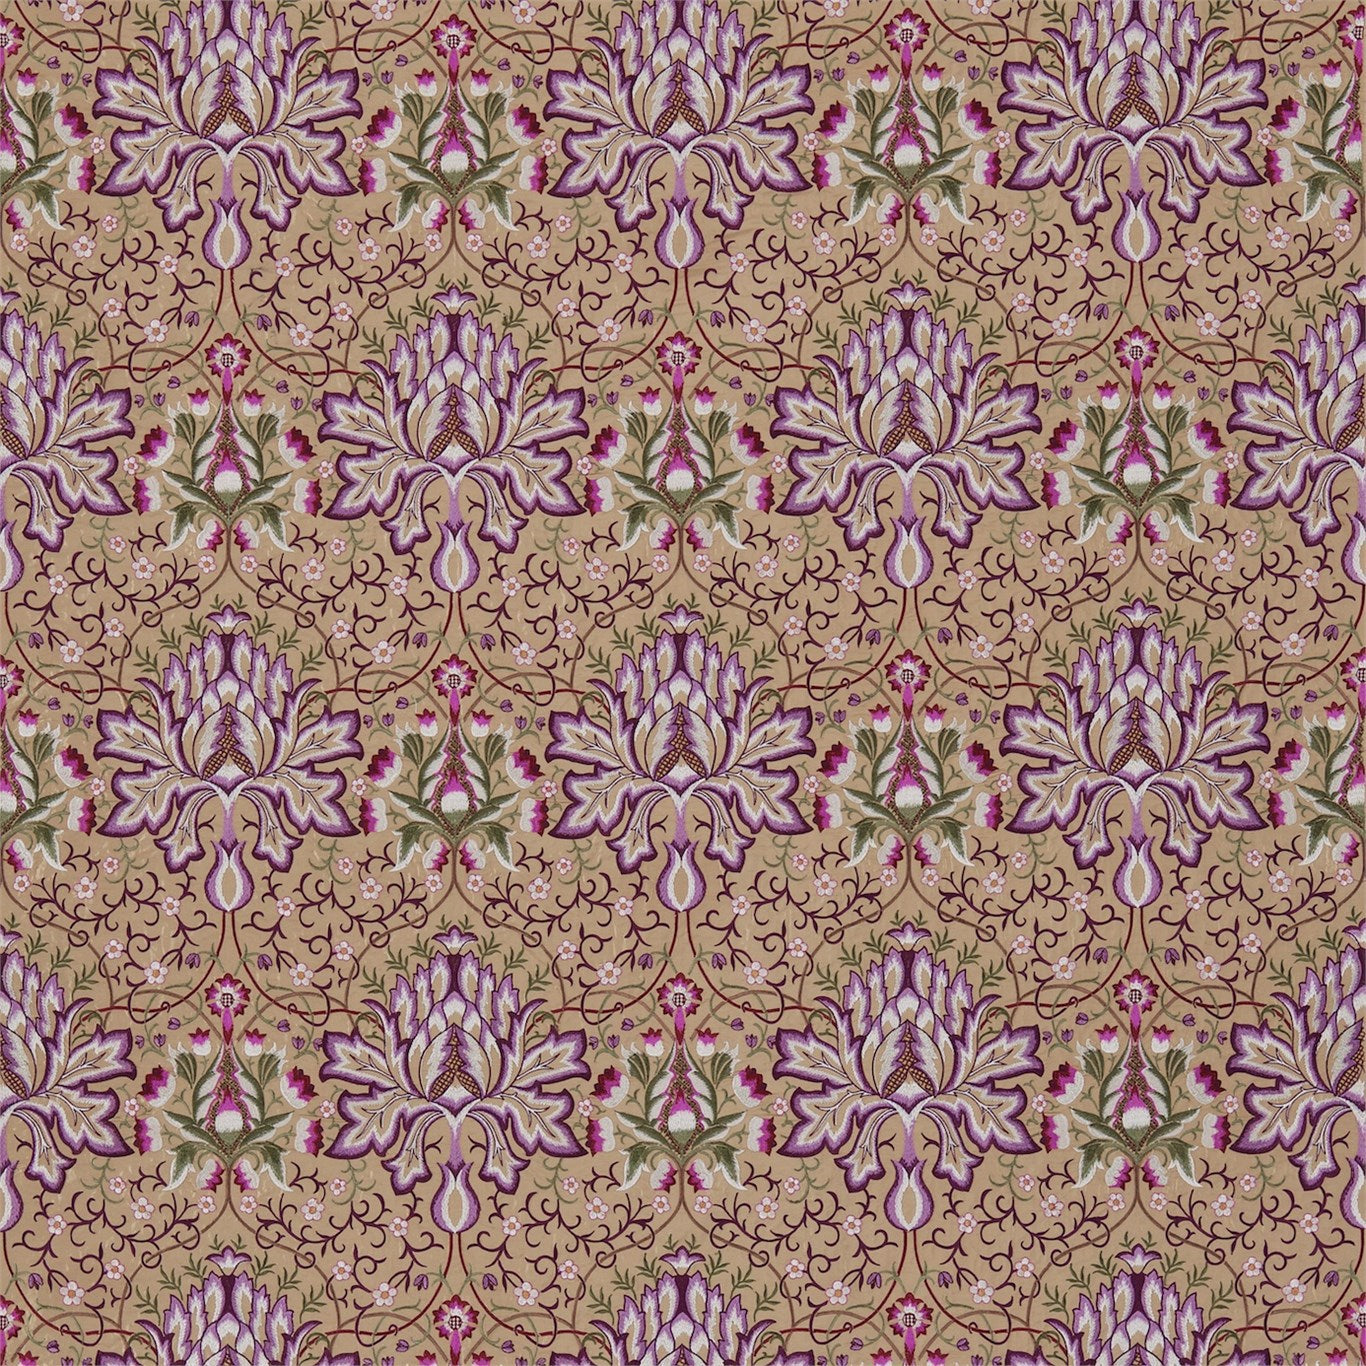 Artichoke Embroidery Fabric by Morris & Co. - DMEM234543 - Aubergine/Gold